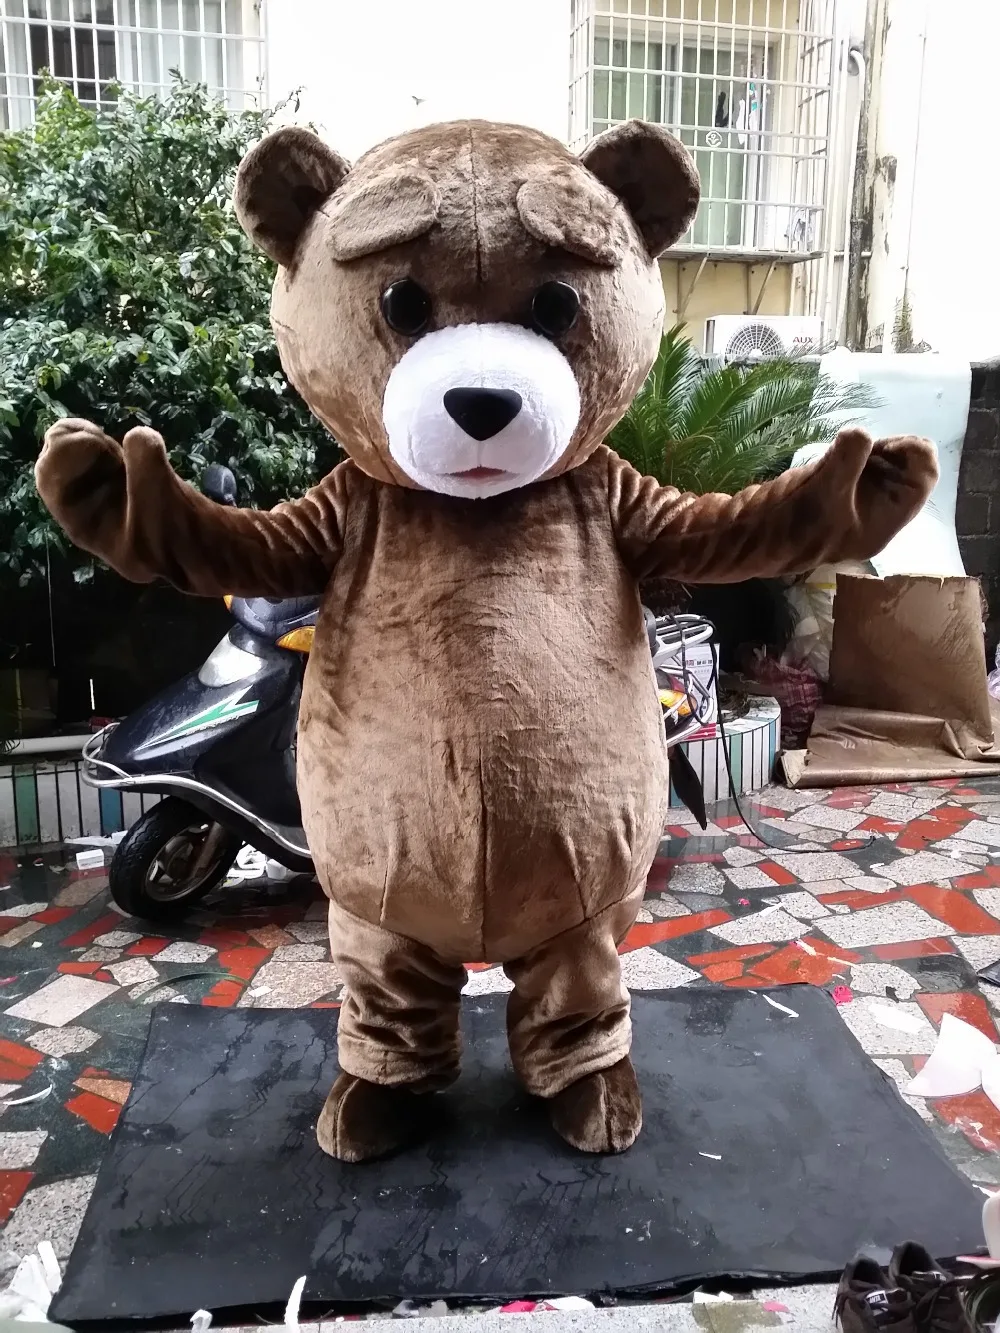 

Bear mascot costumes bear costumes brown bear walking act teddy bear mascot costume